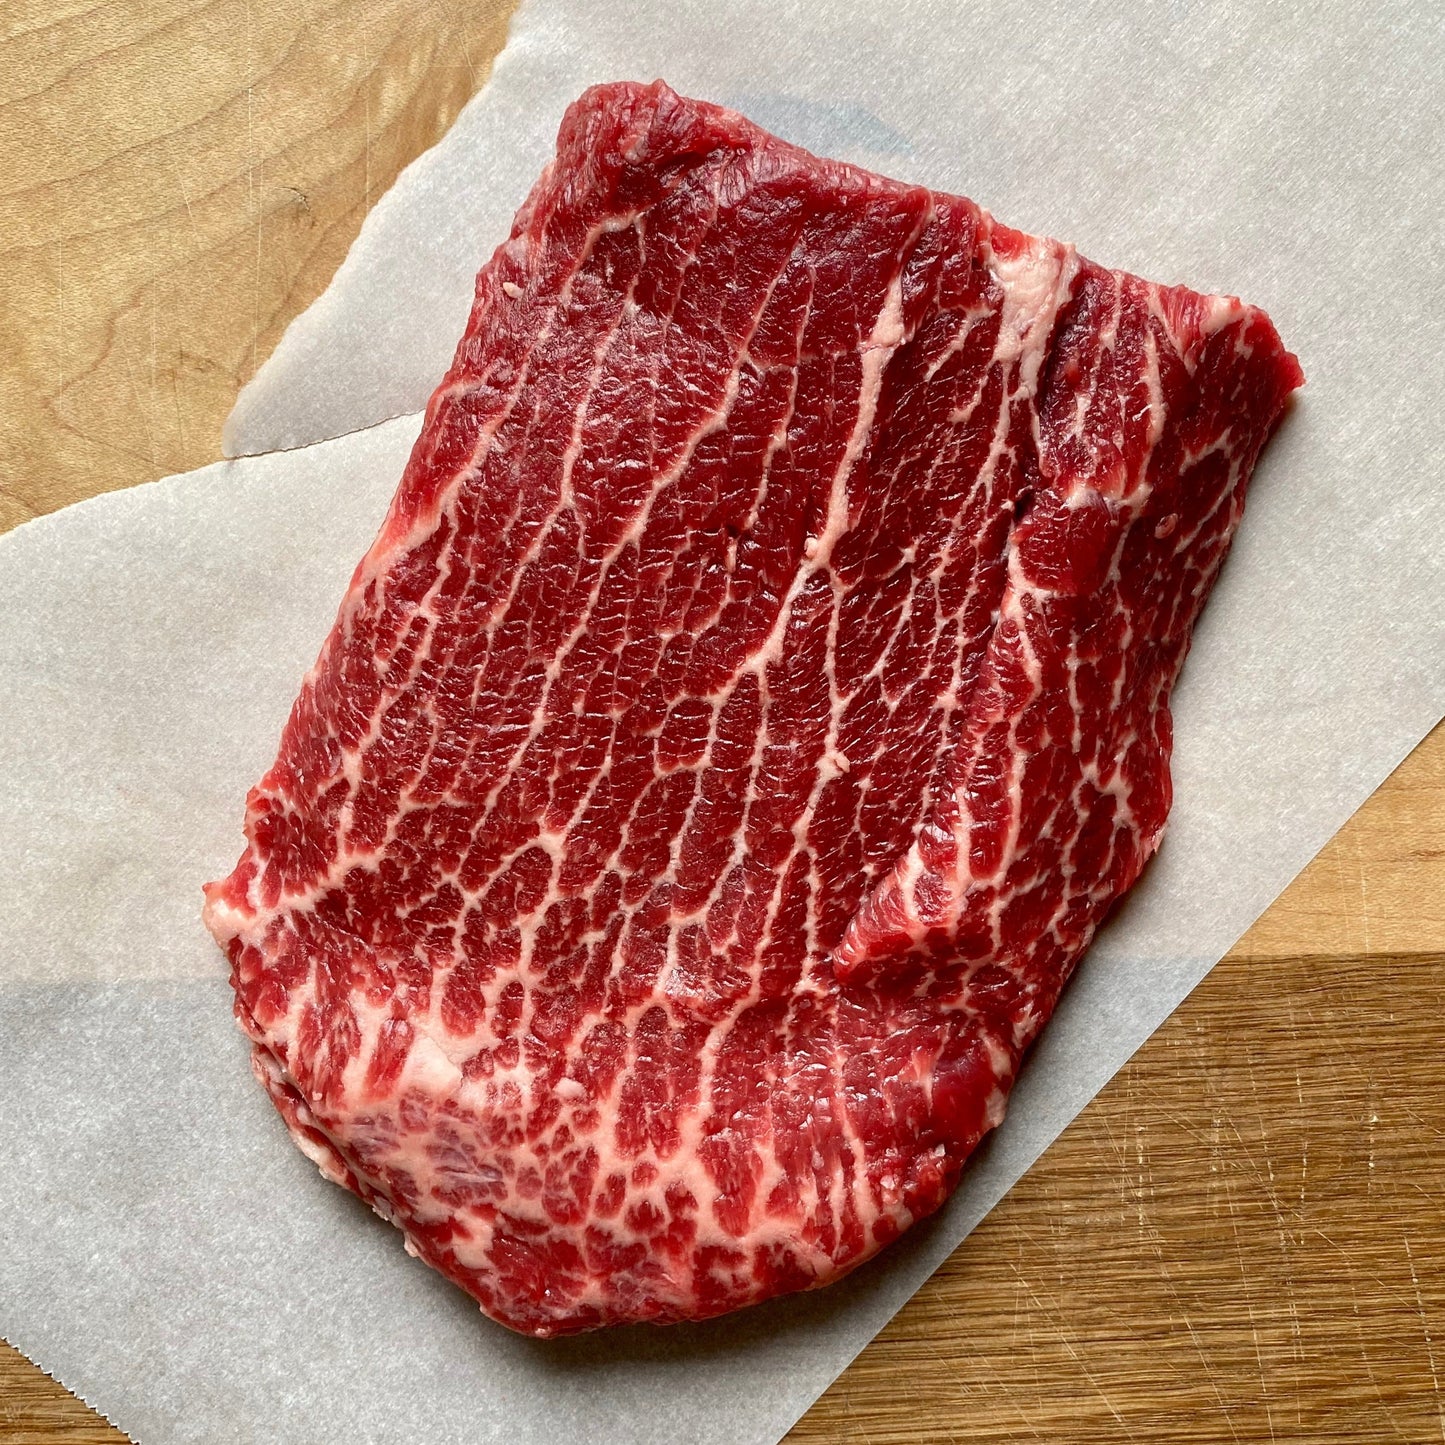 Grass-fed Flat Iron Steak - $14.99/lb